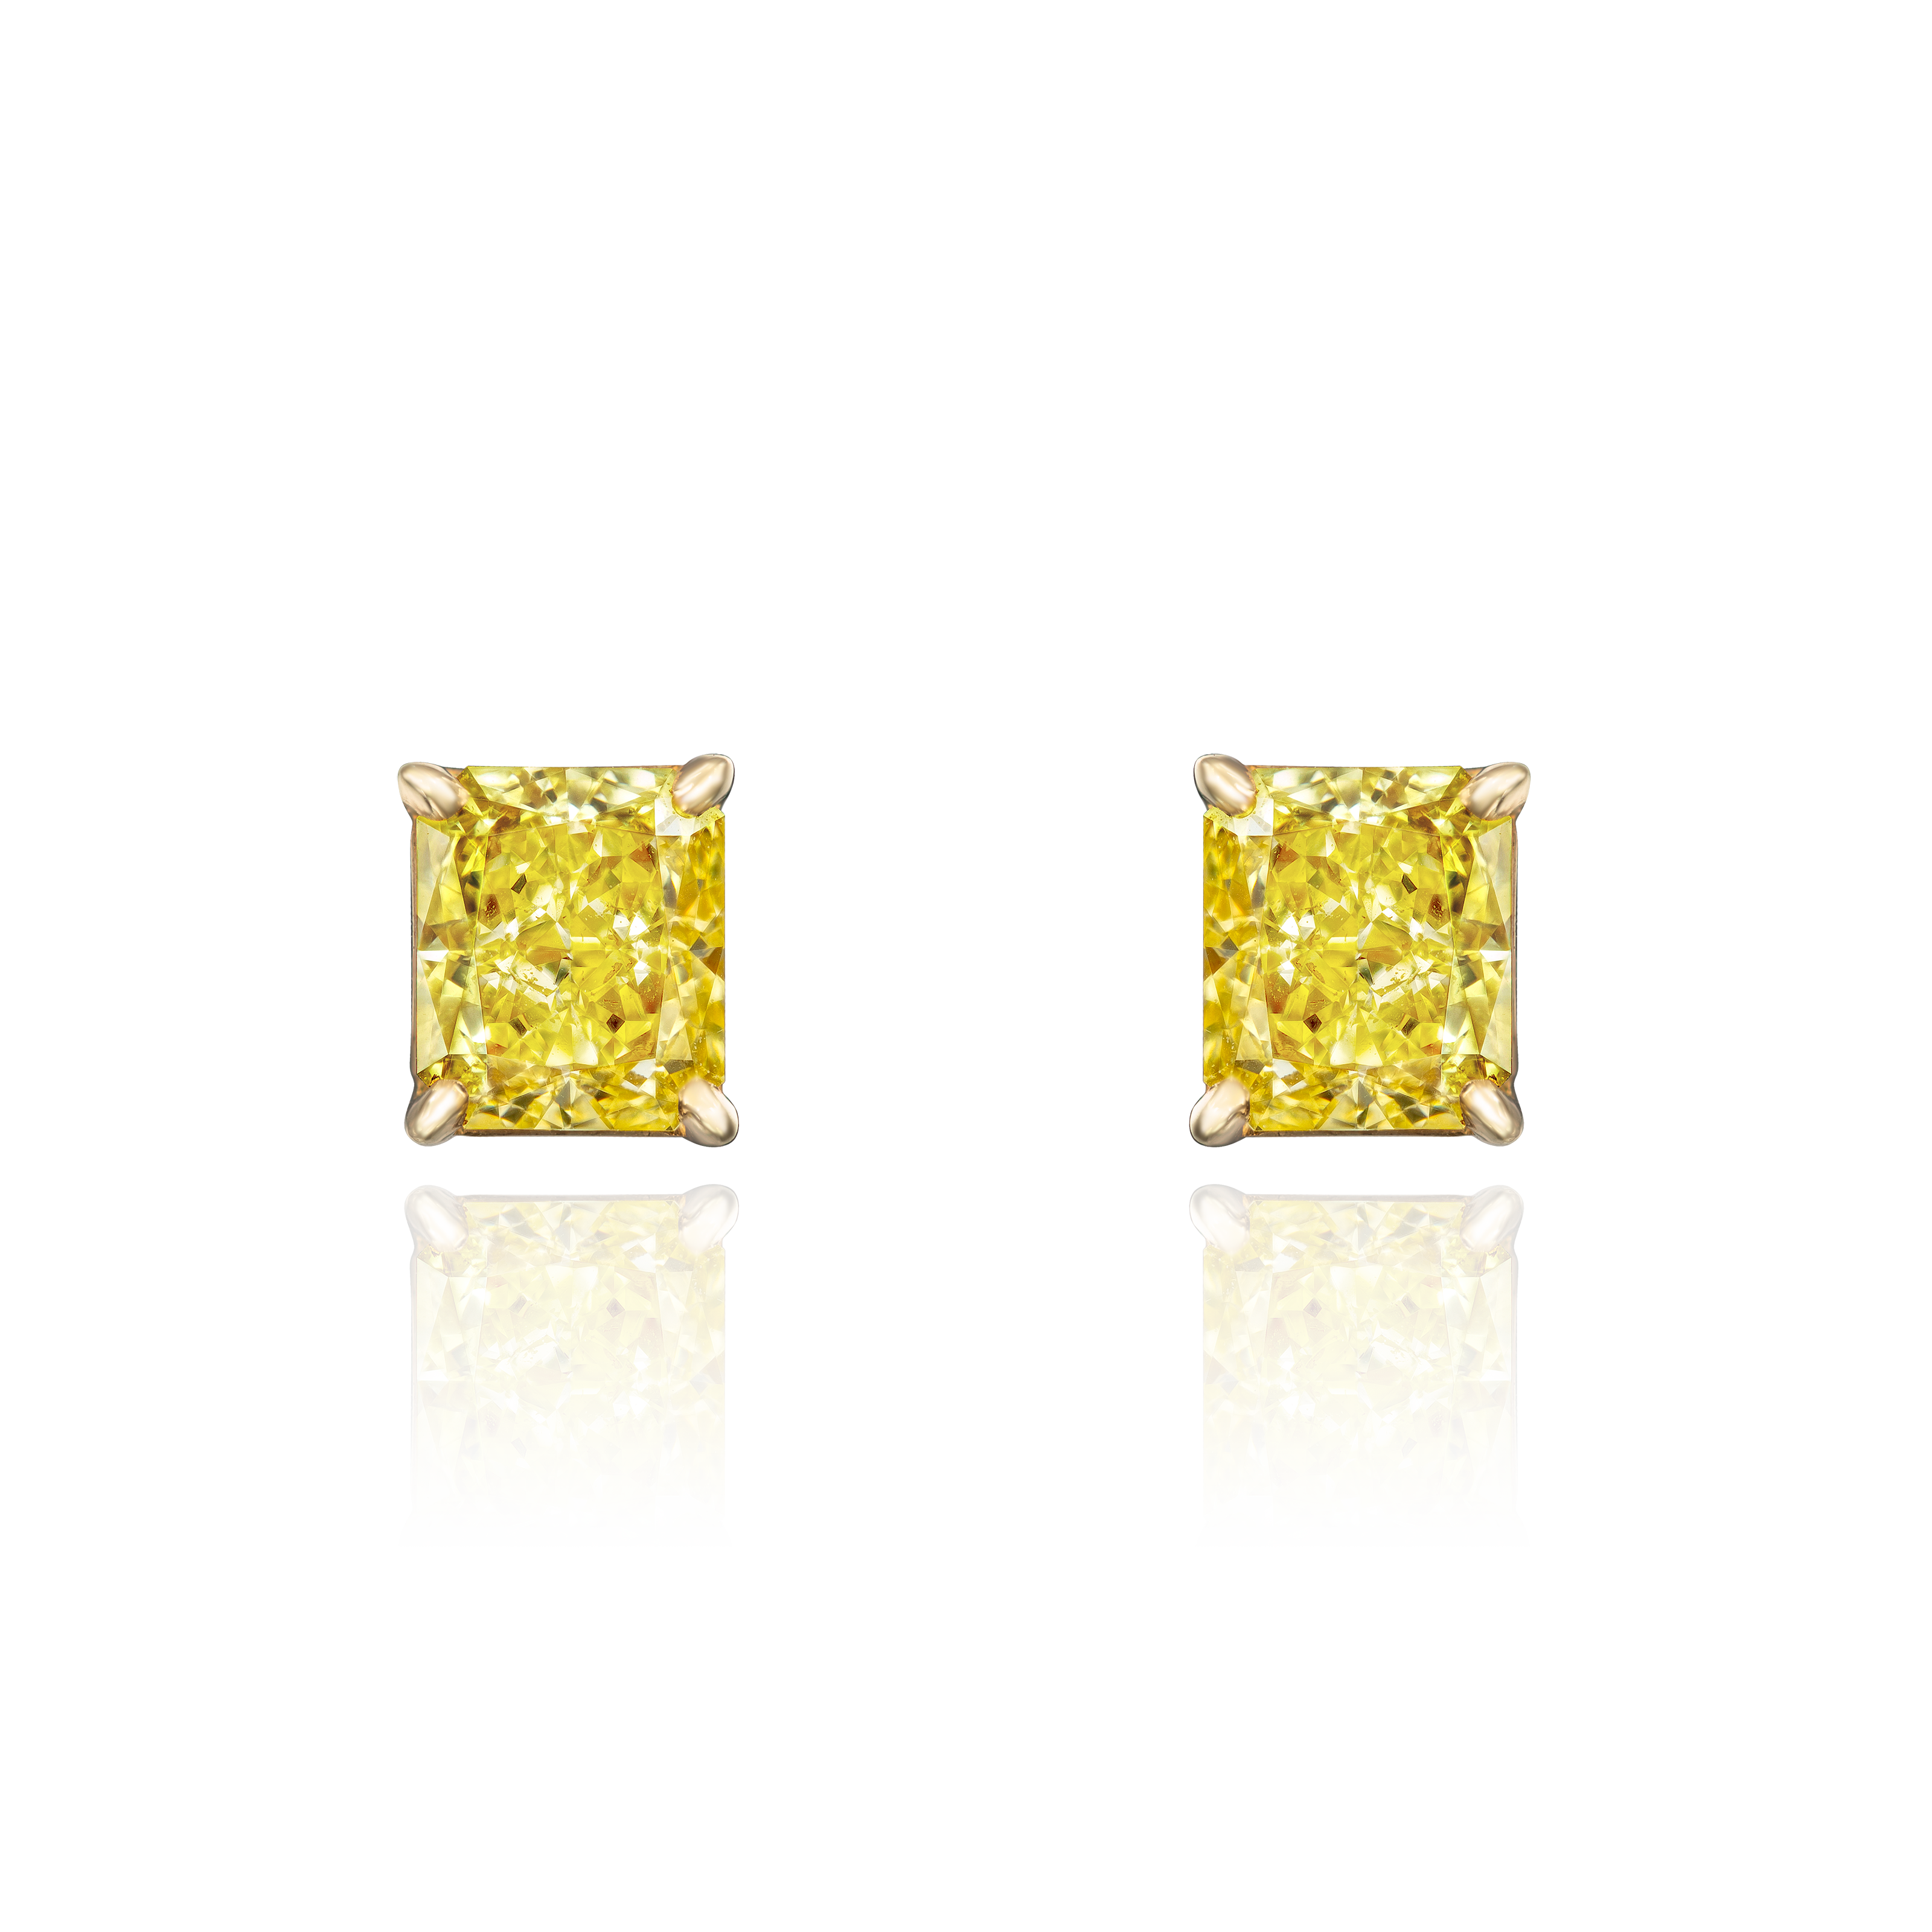 1.06cts Natural Fancy Intense Yellow Radiant Cut Yellow Diamond Studs